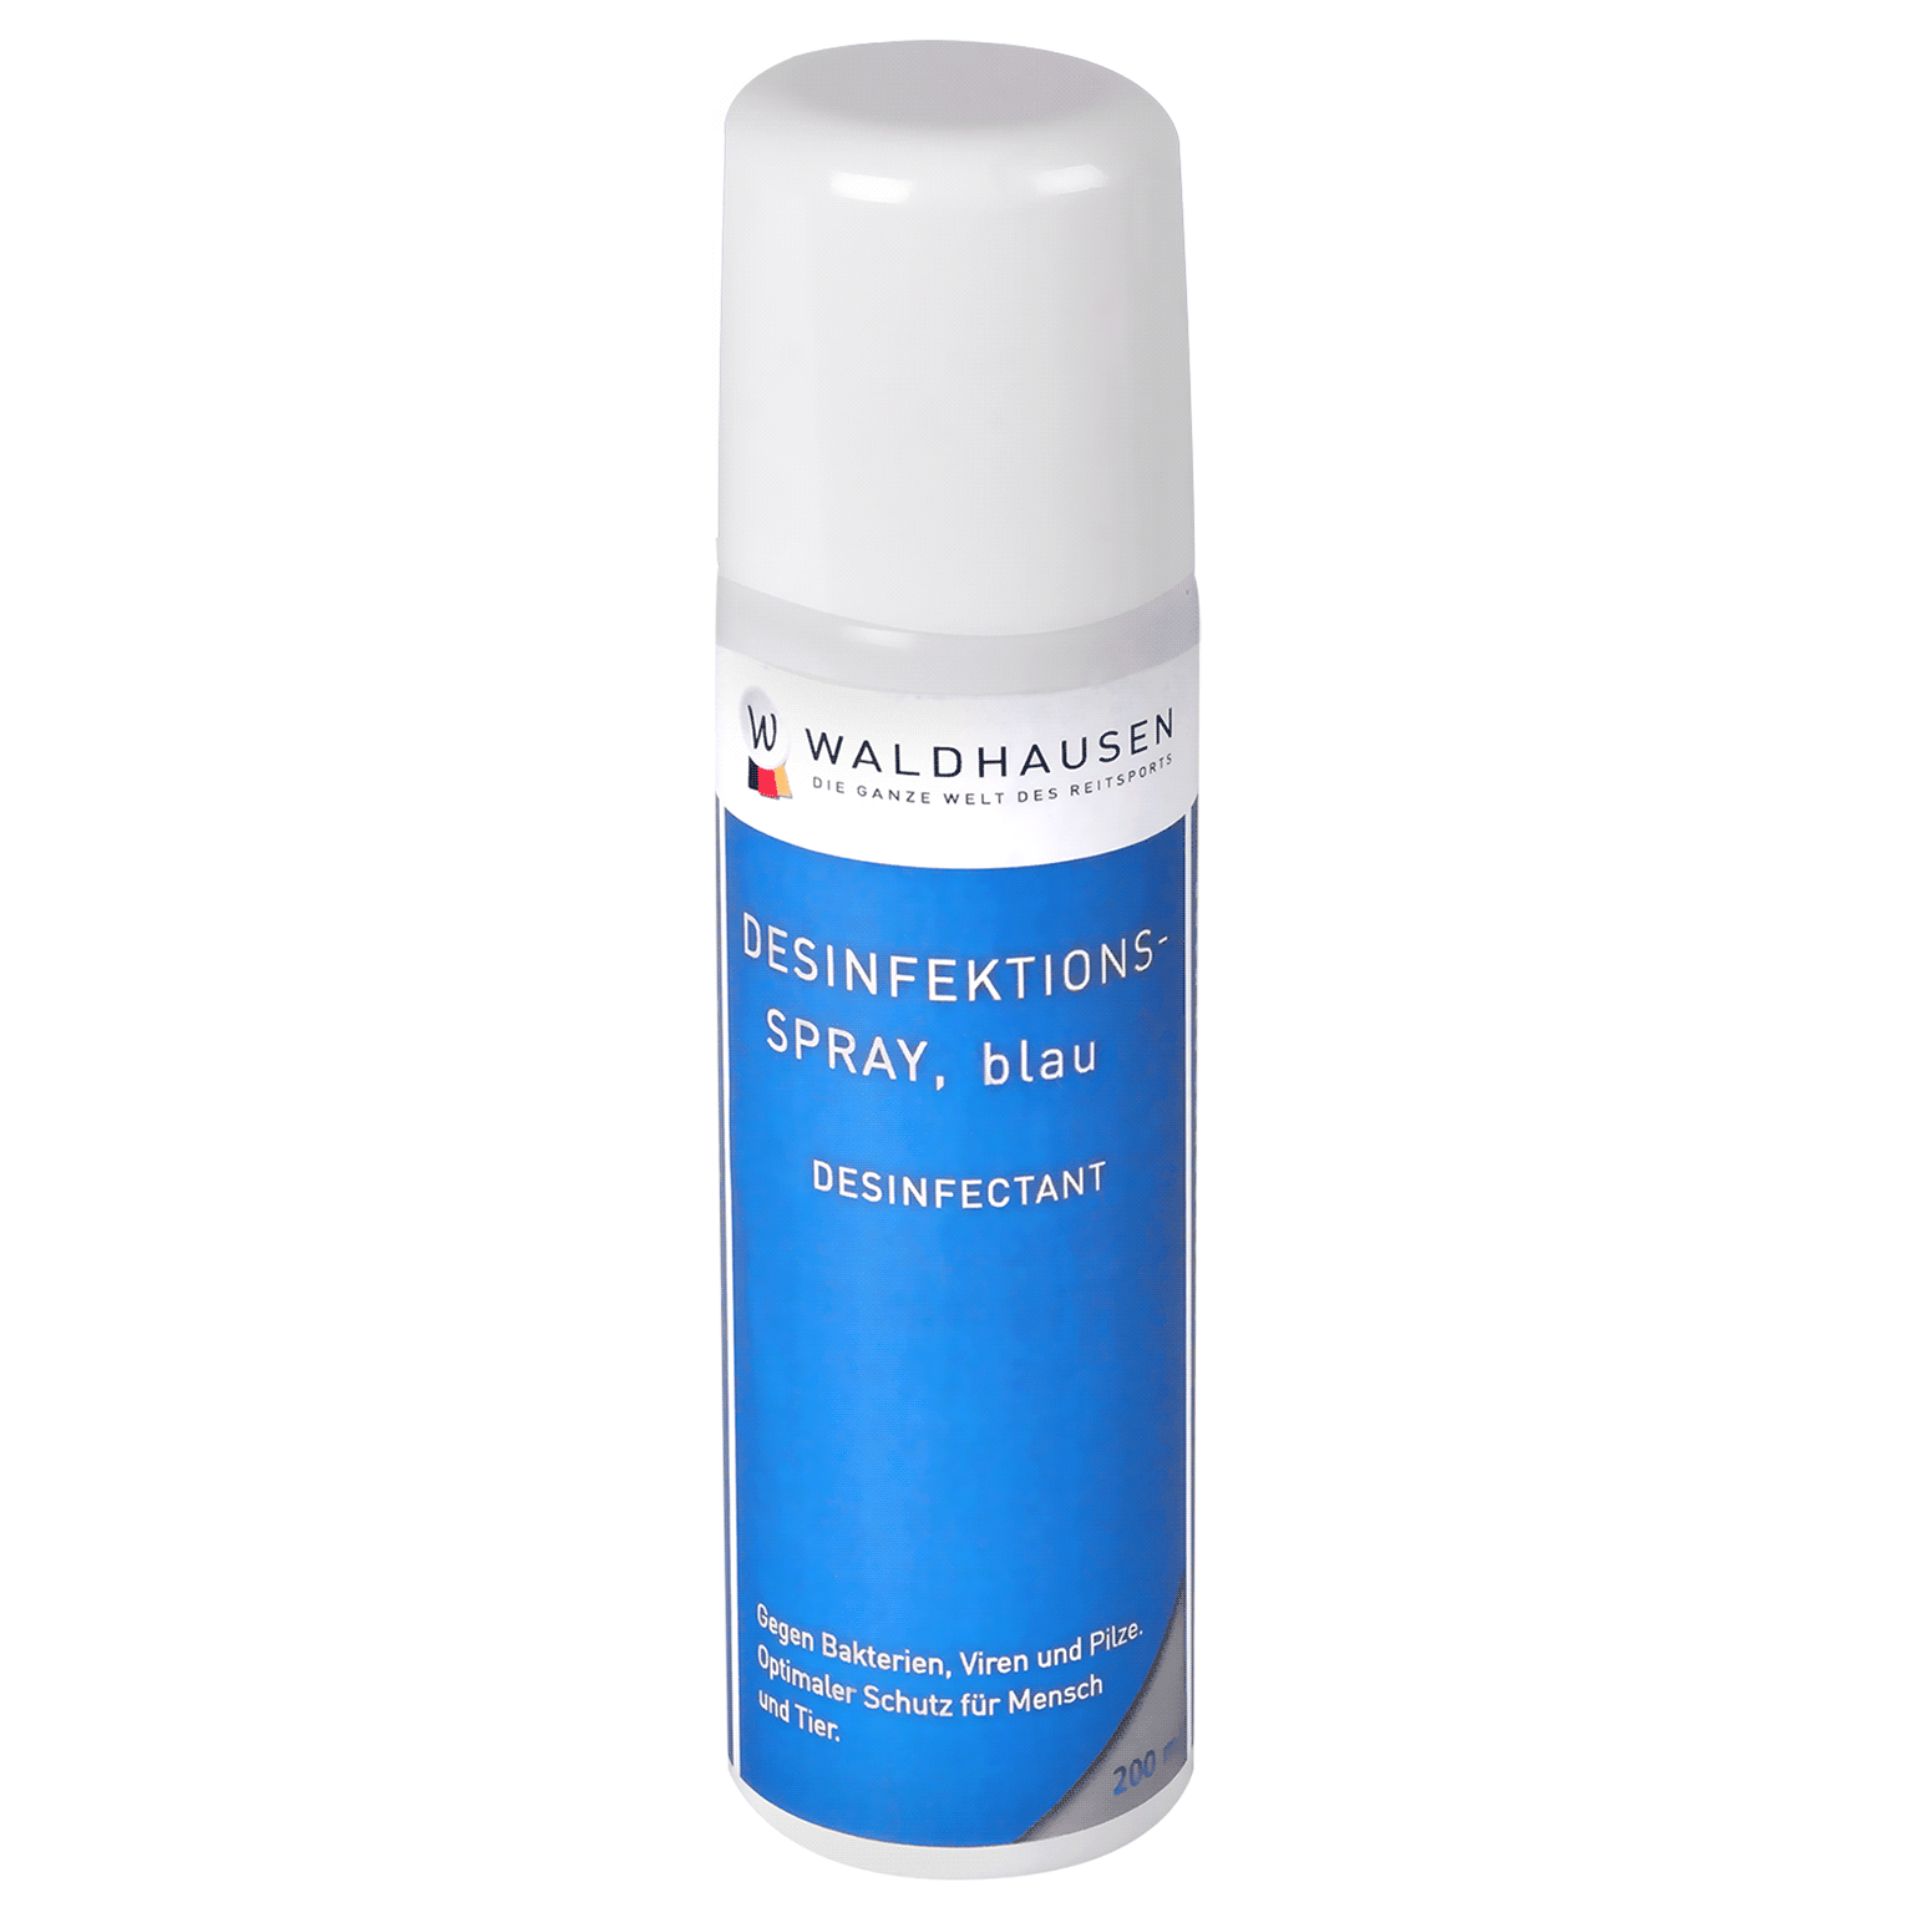 Waldhausen Desinfektions Spray, blau, 200 ml